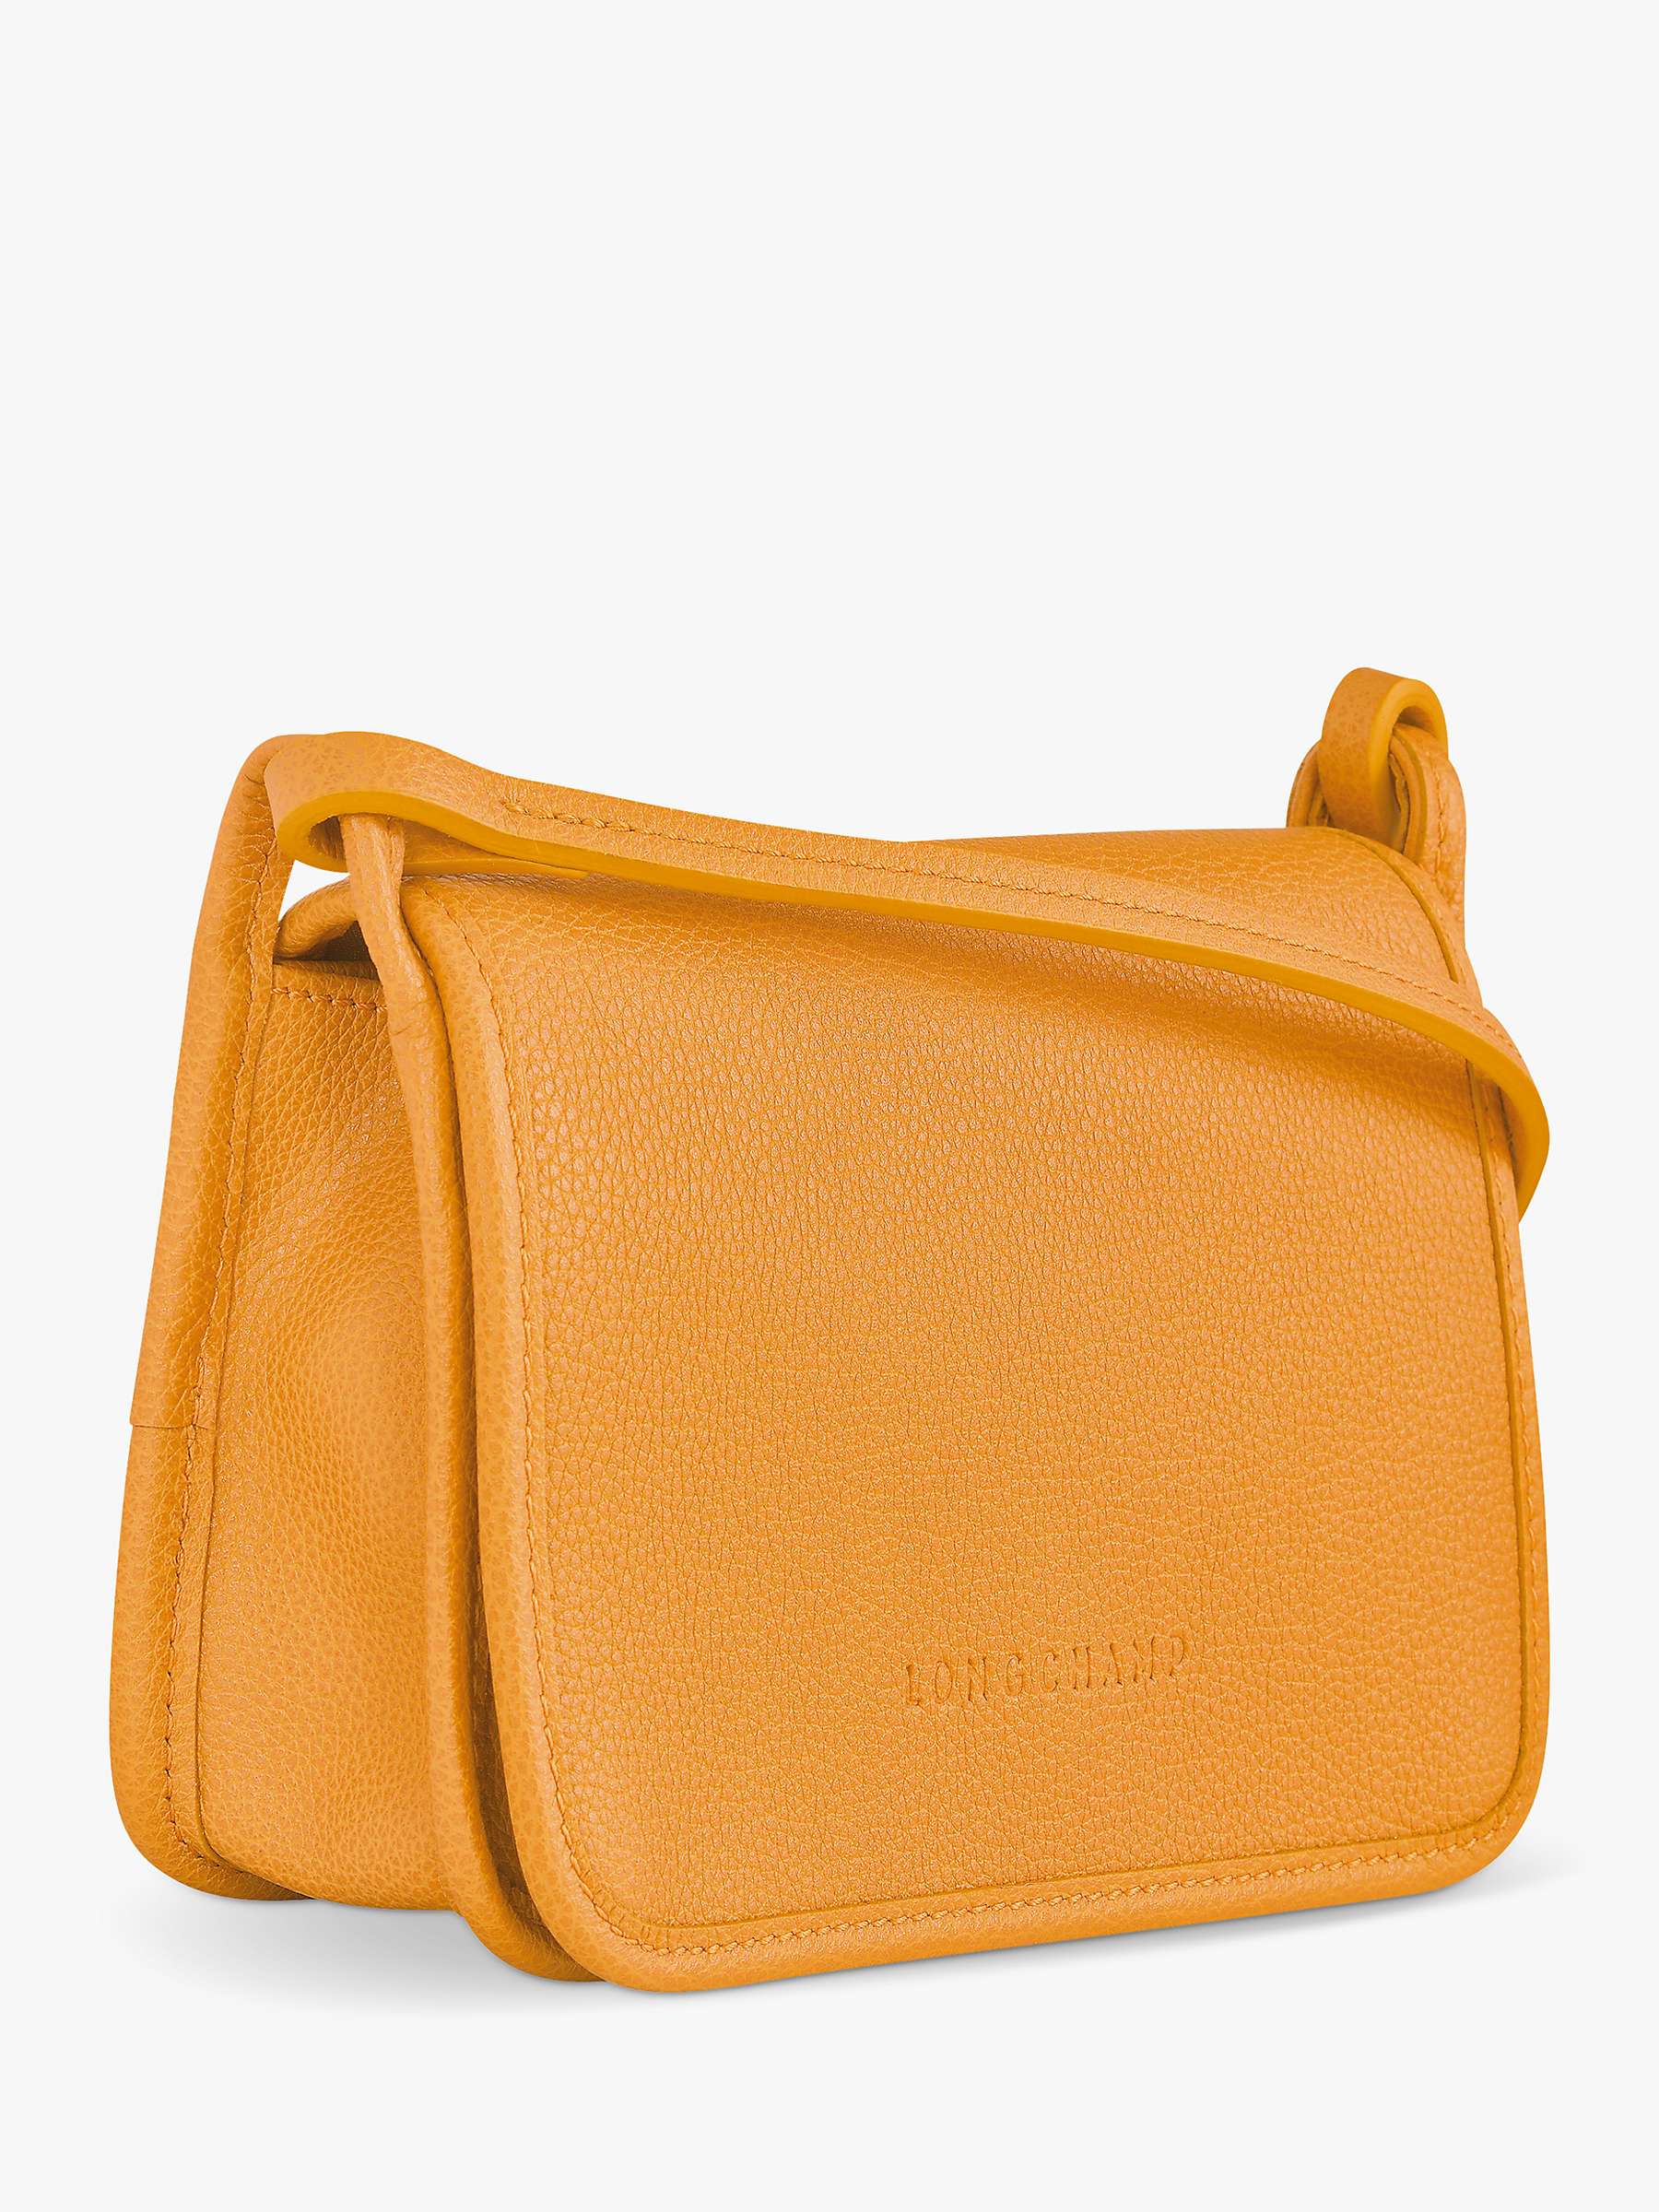 Buy Longchamp Le Foulonné Leather Wallet on Shoulder Strap Online at johnlewis.com